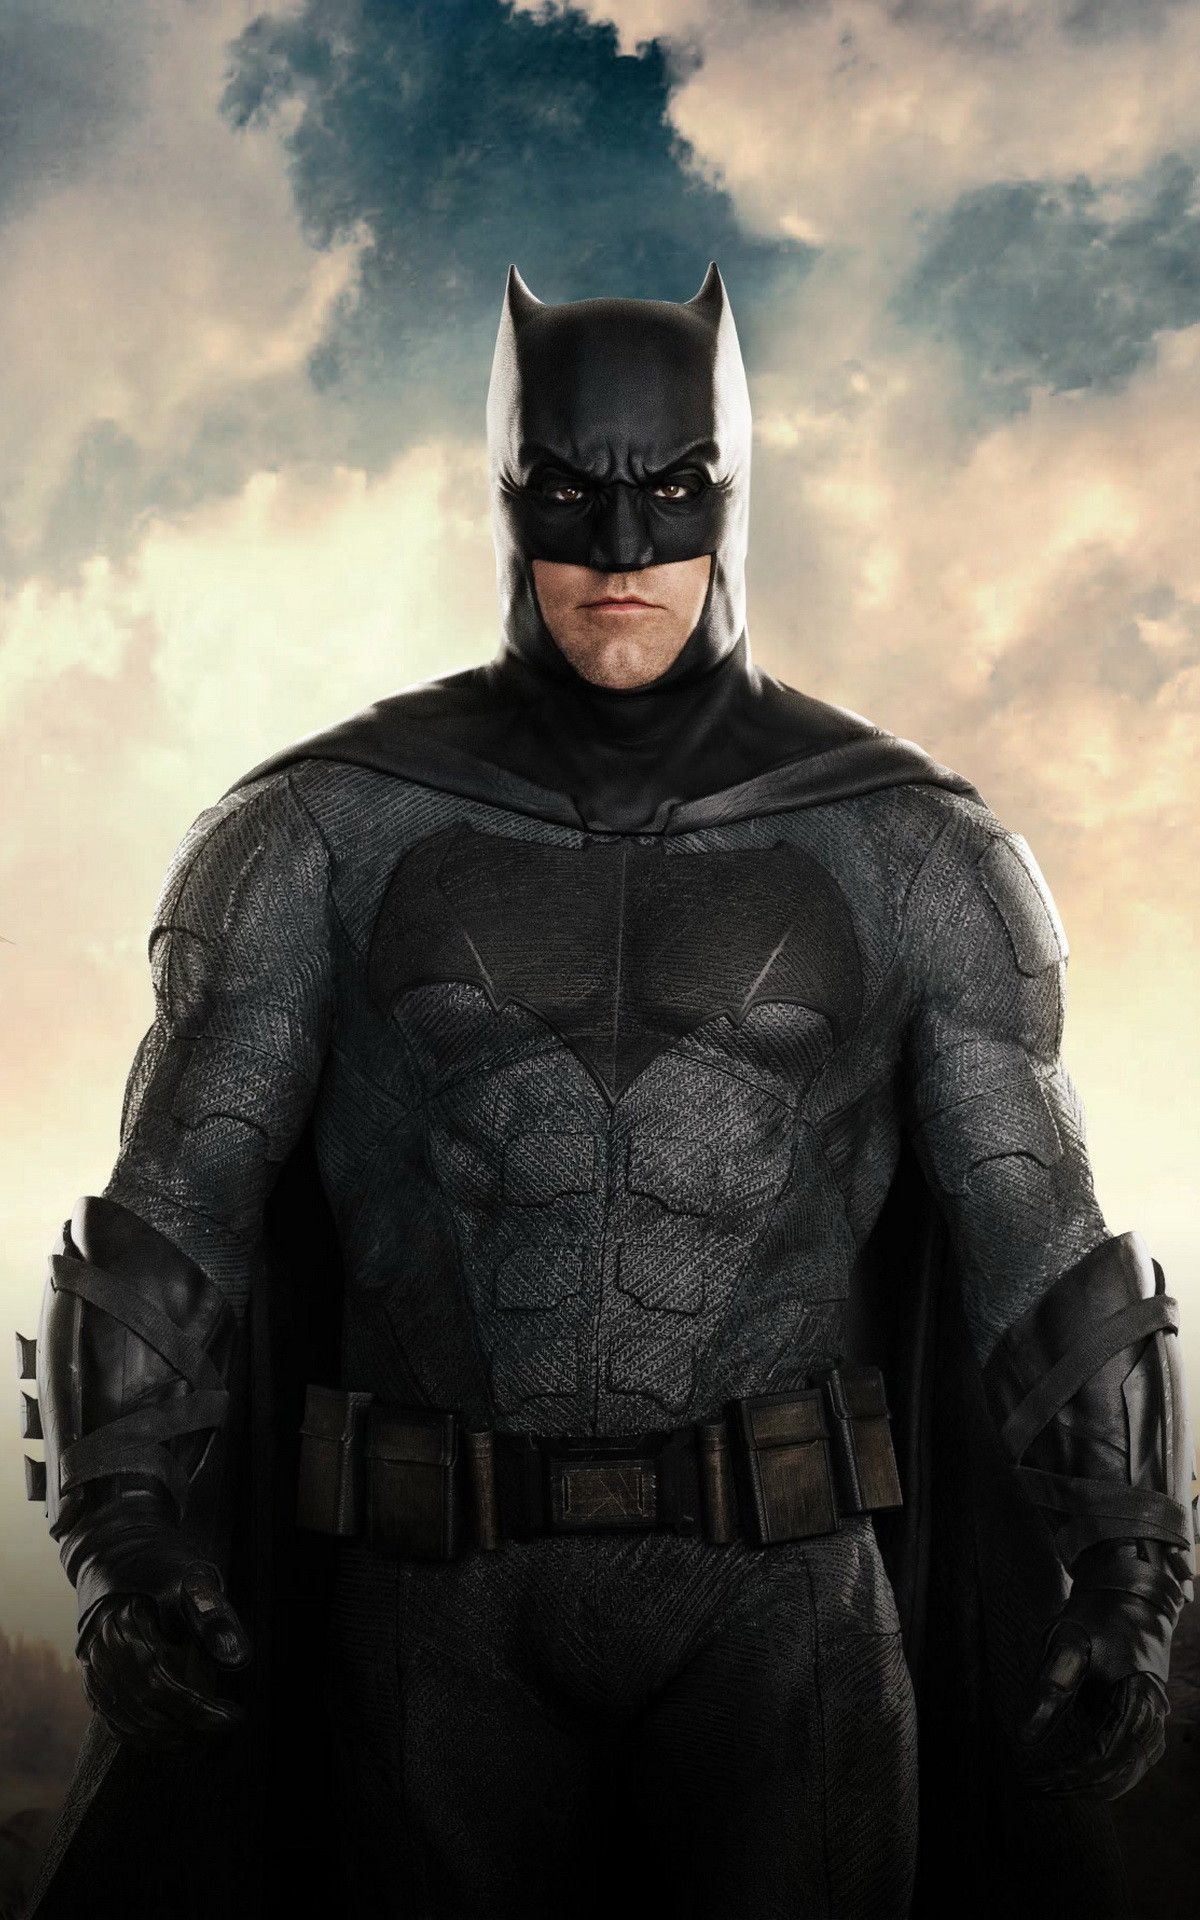 Young Ben Affleck as Batman Wallpaper 5k Ultra HD ID8162